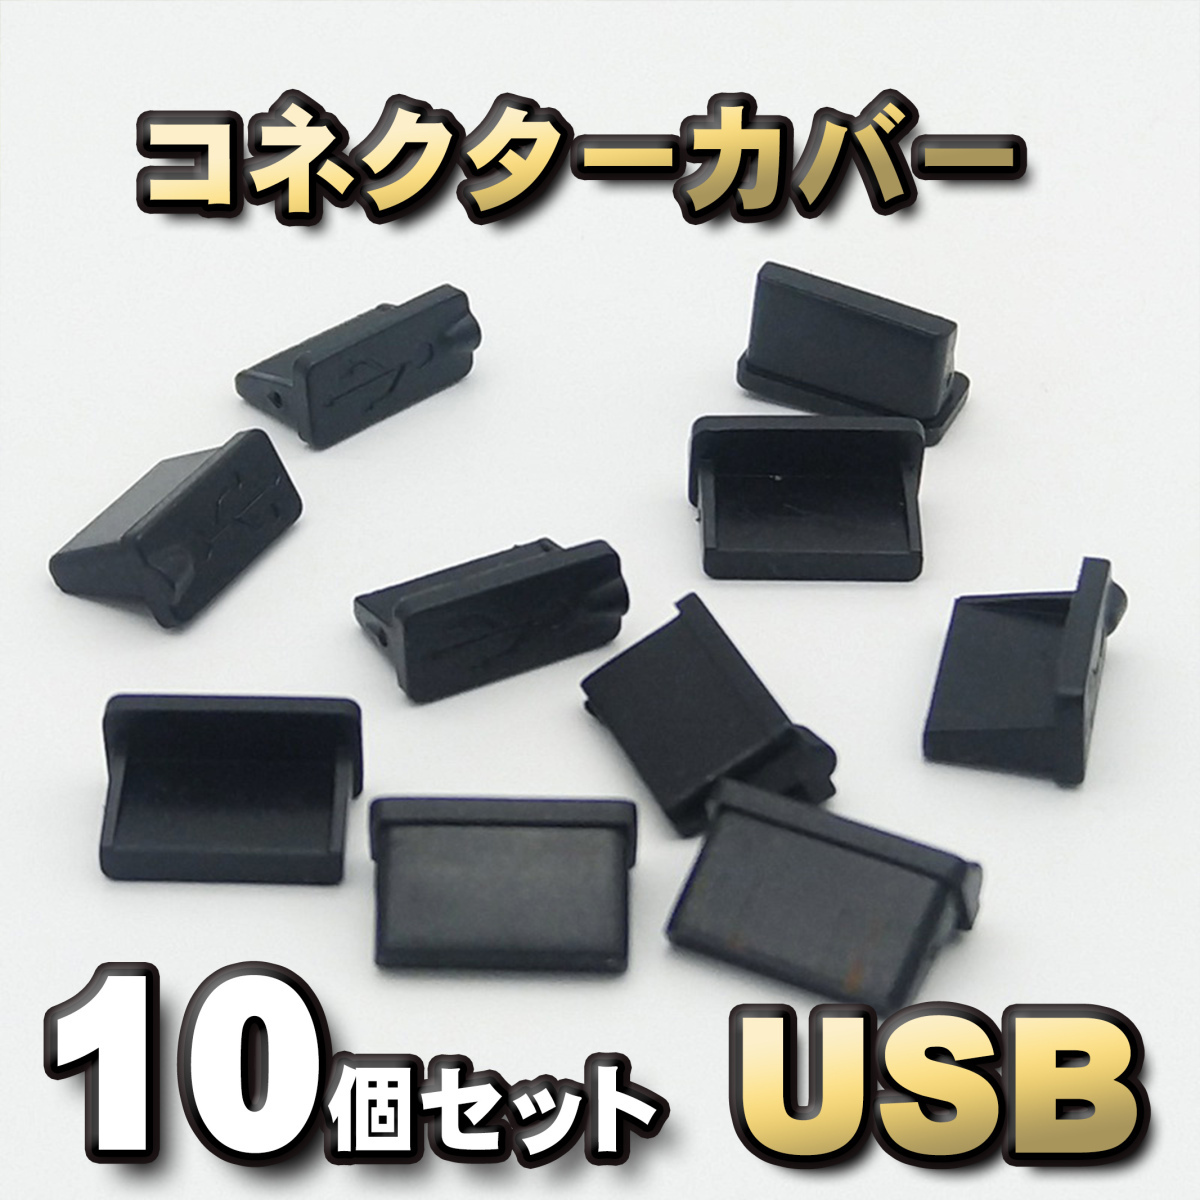 USB -крышка разъема крышки терминала защита крышки крышки крышки цвета черные 10 наборов